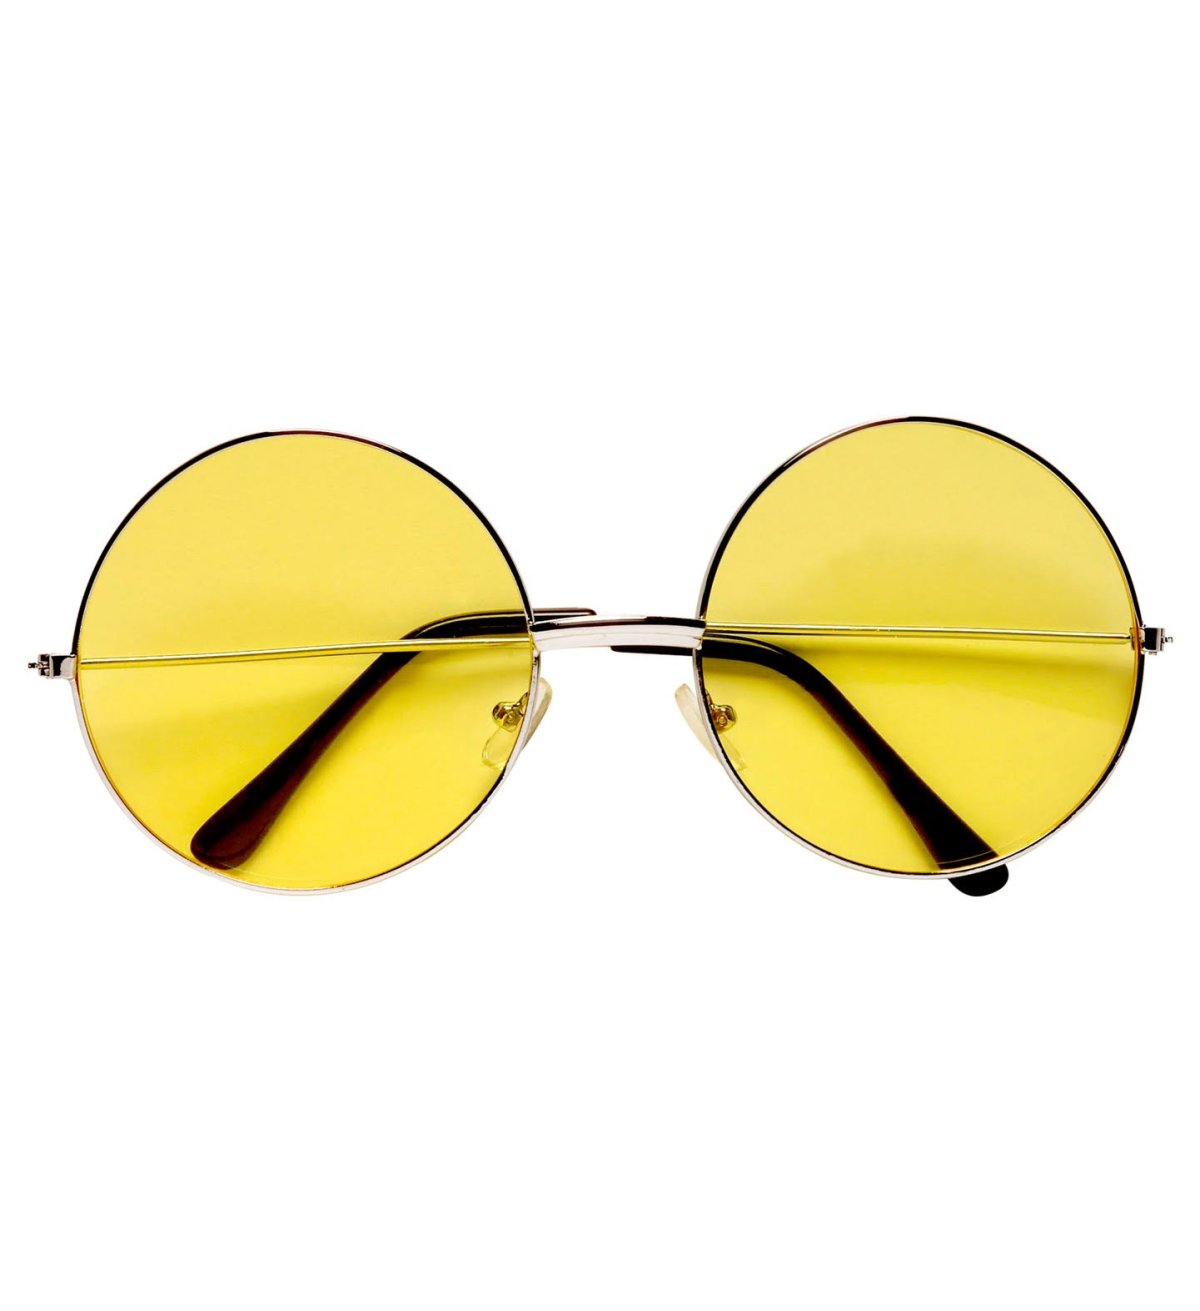 Lennon briller med store glas i gul | hippie med runde glas